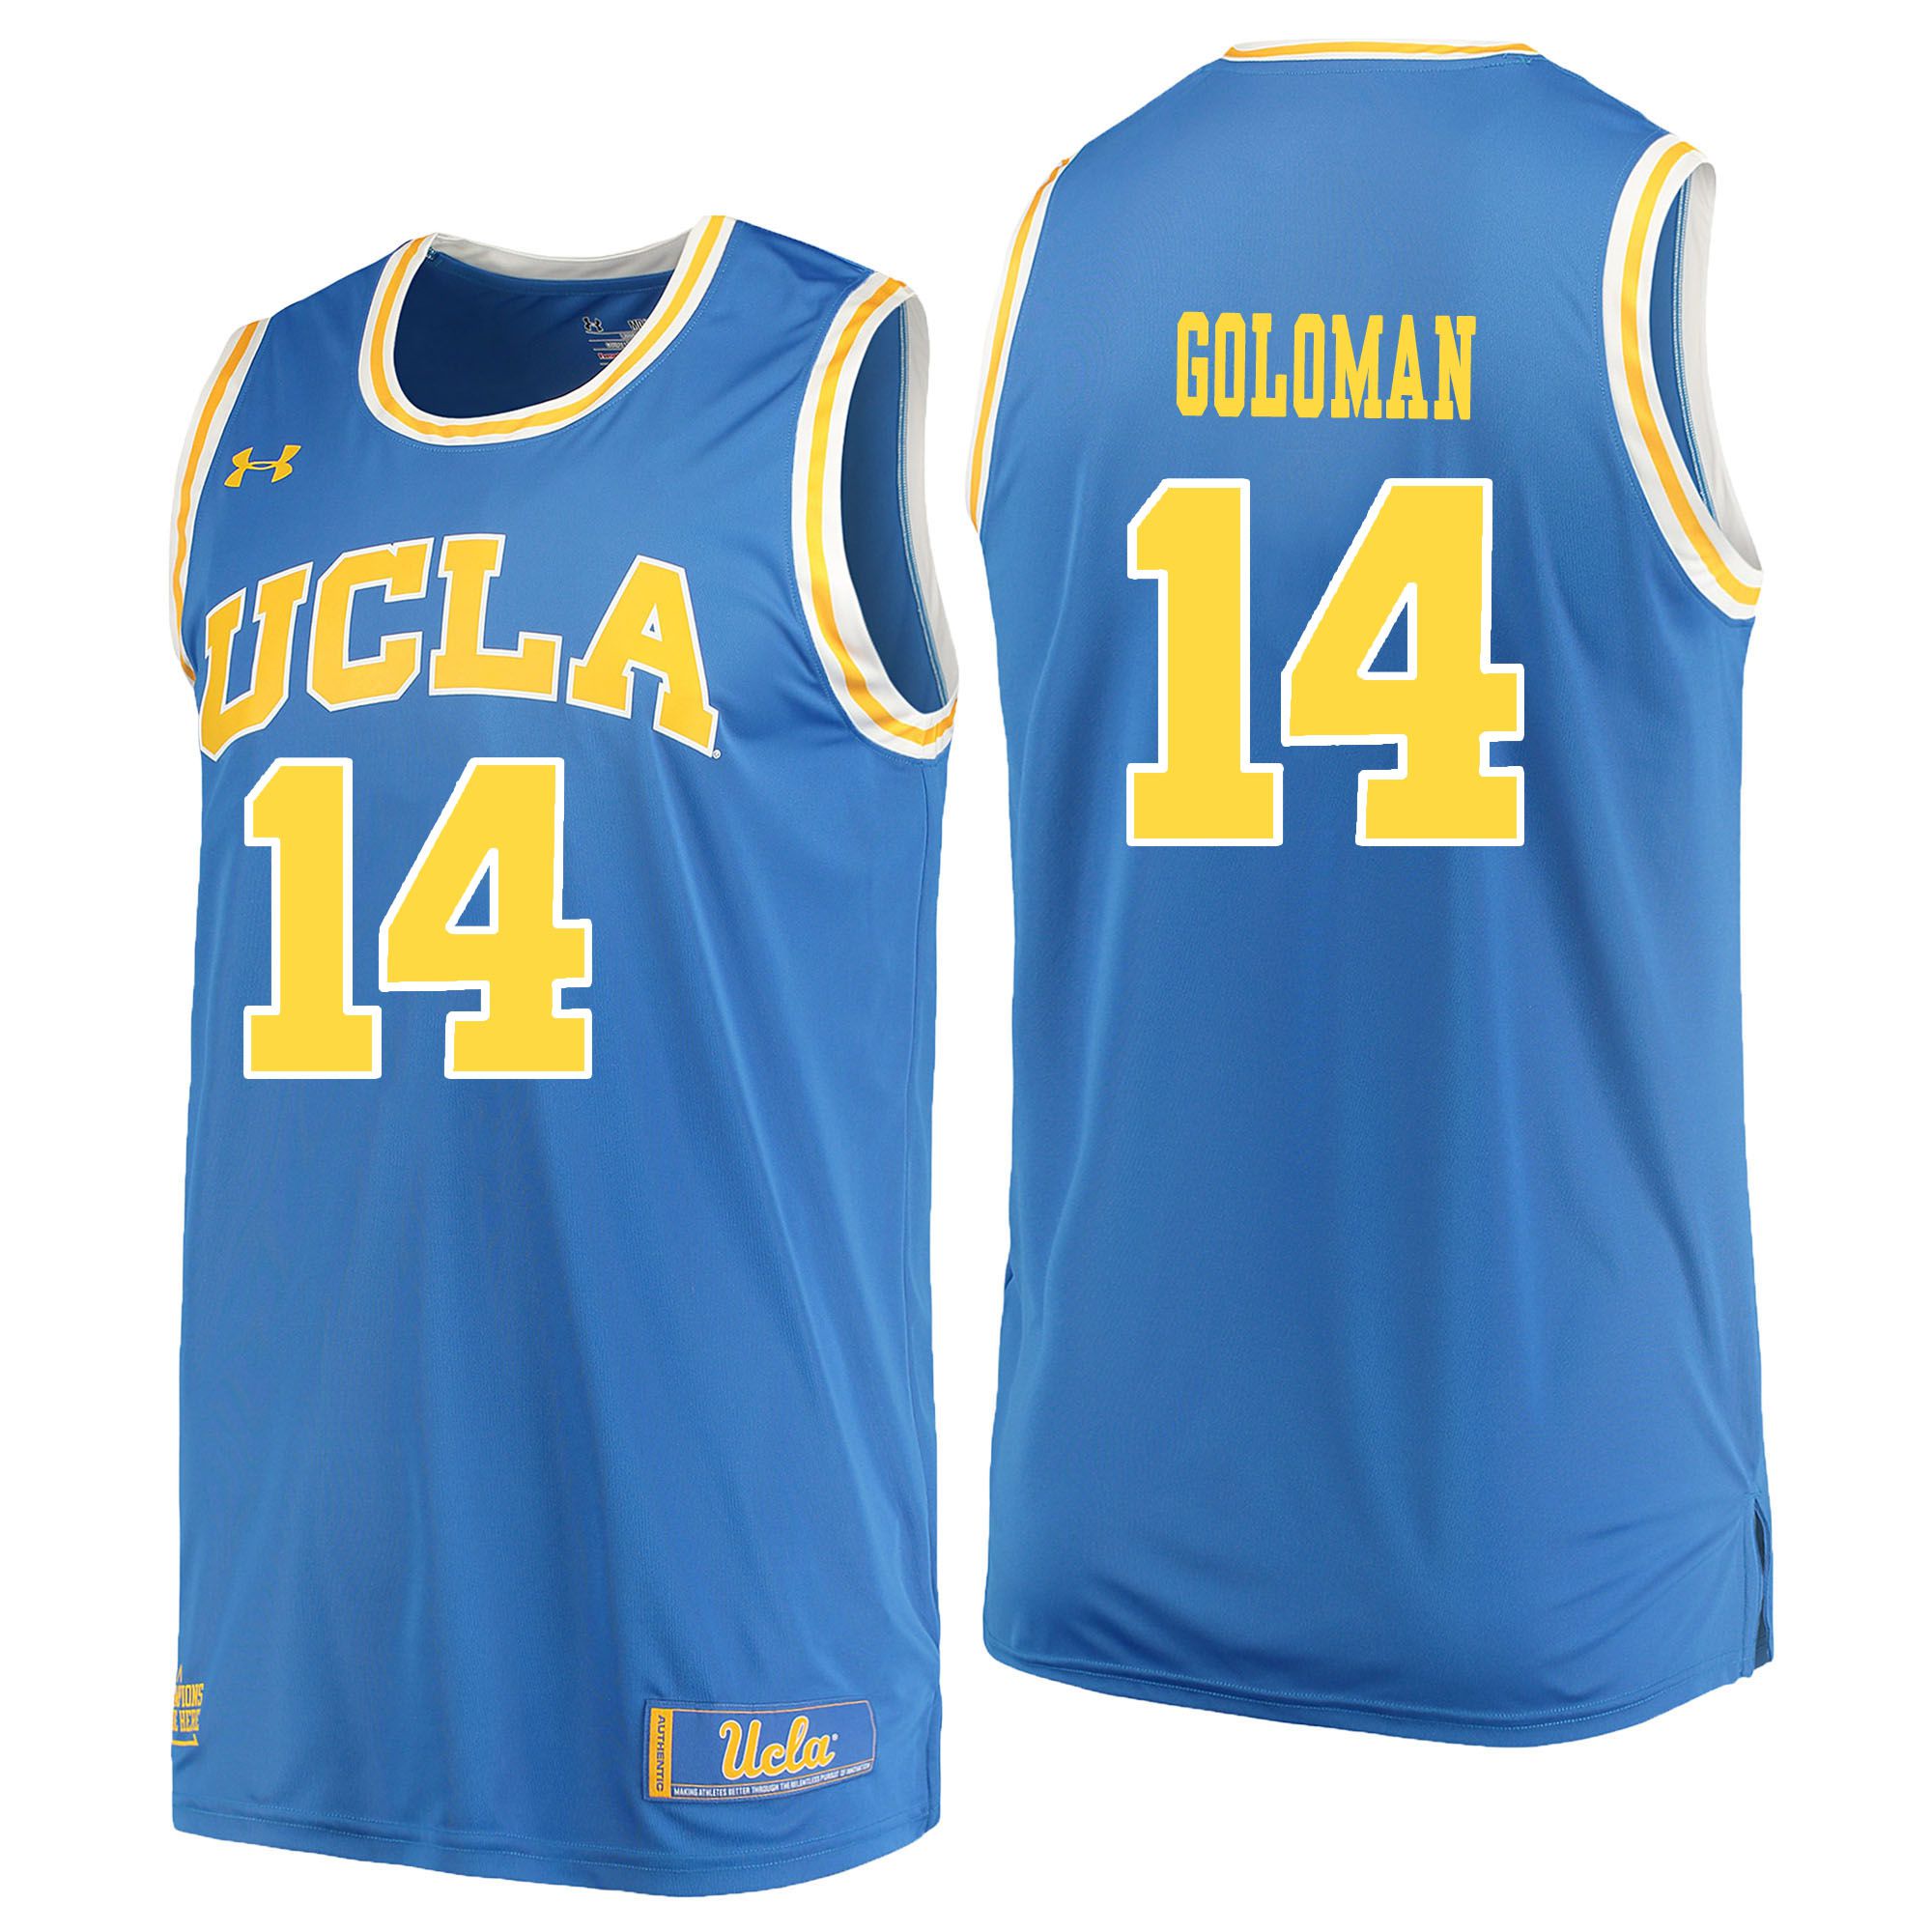 Men UCLA UA #14 Goloman Light Blue Customized NCAA Jerseys